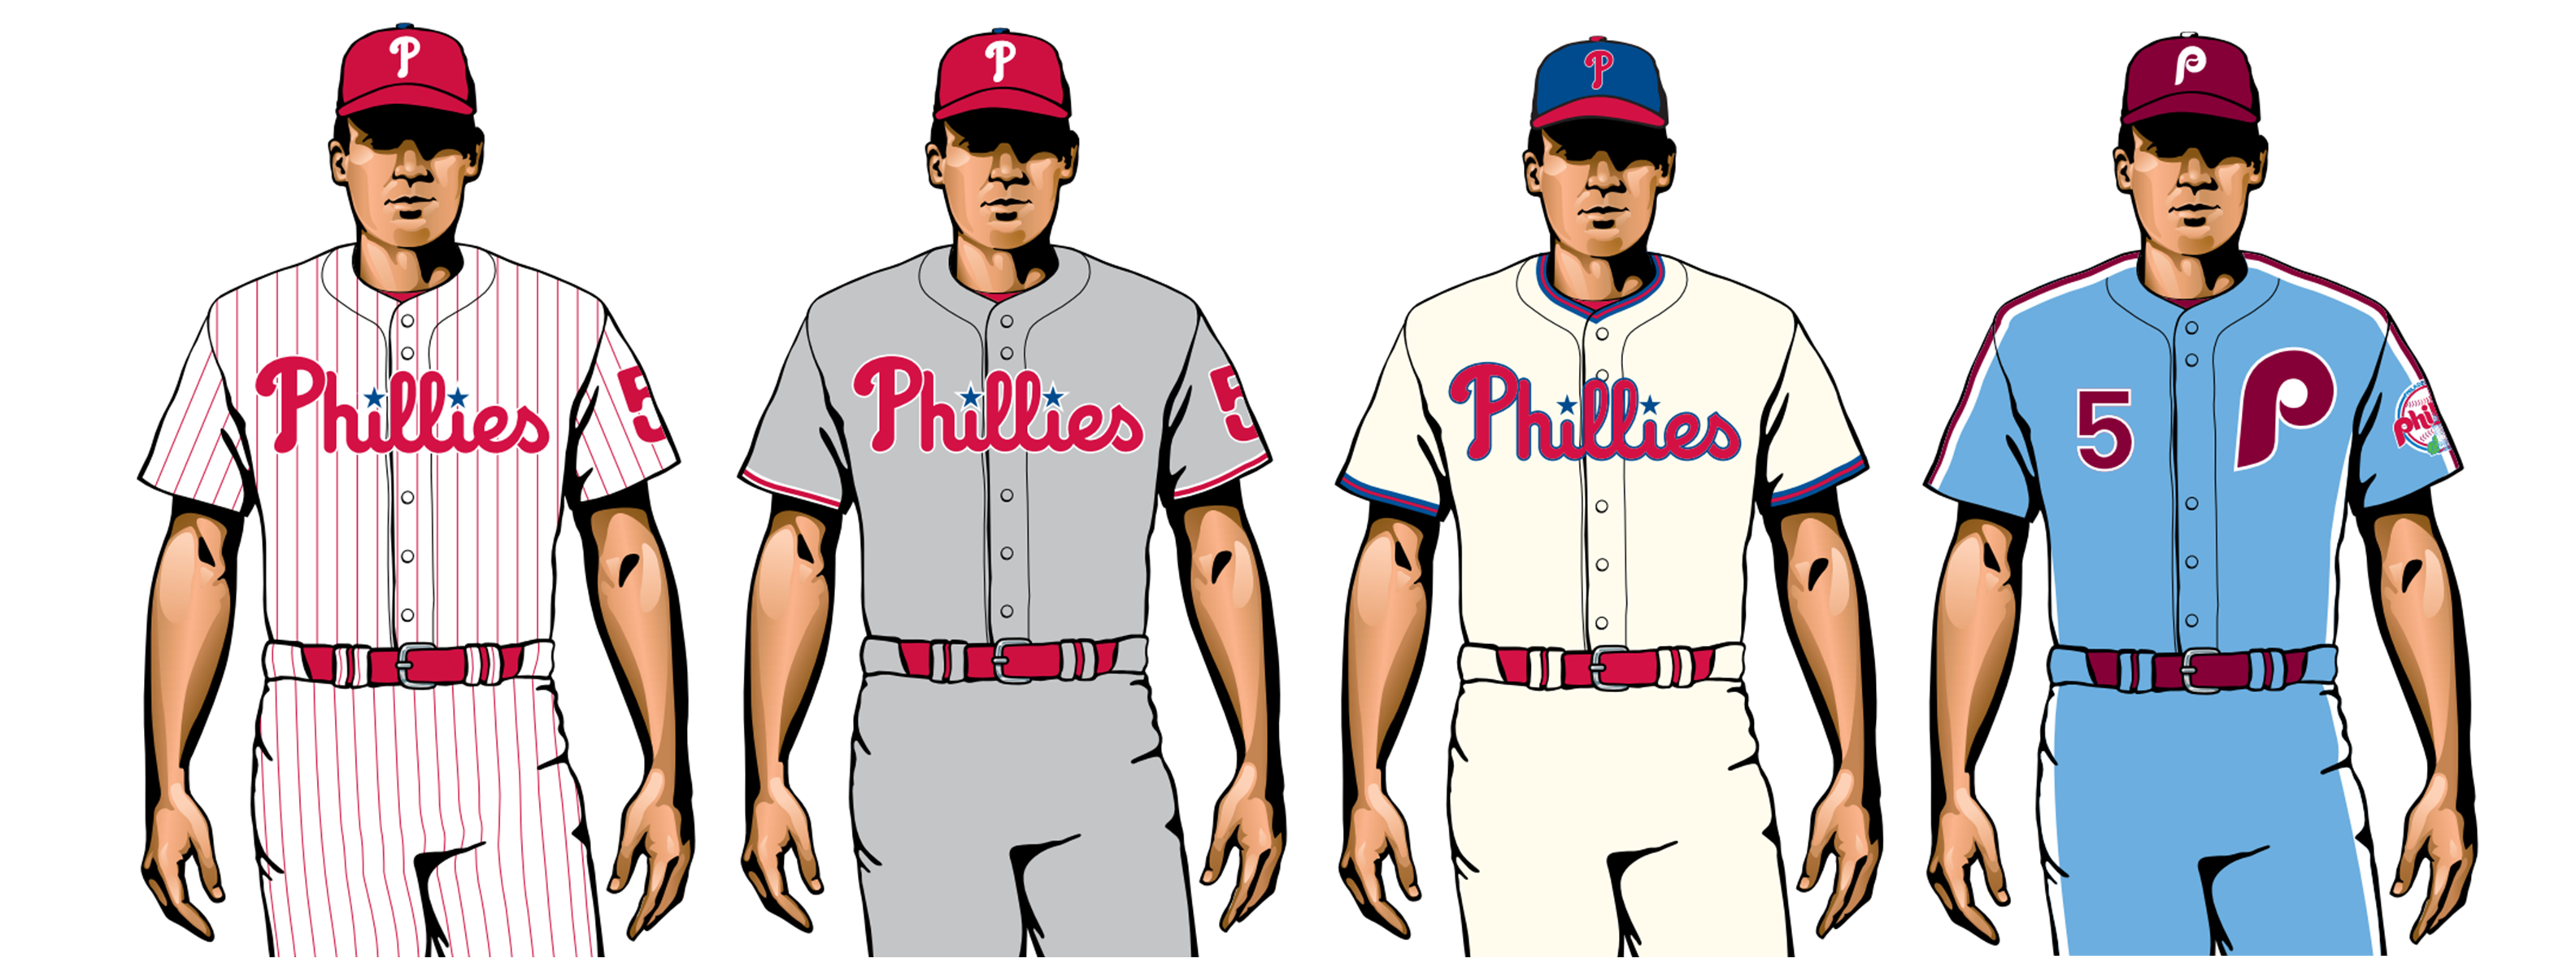 phillies uniforms 2020